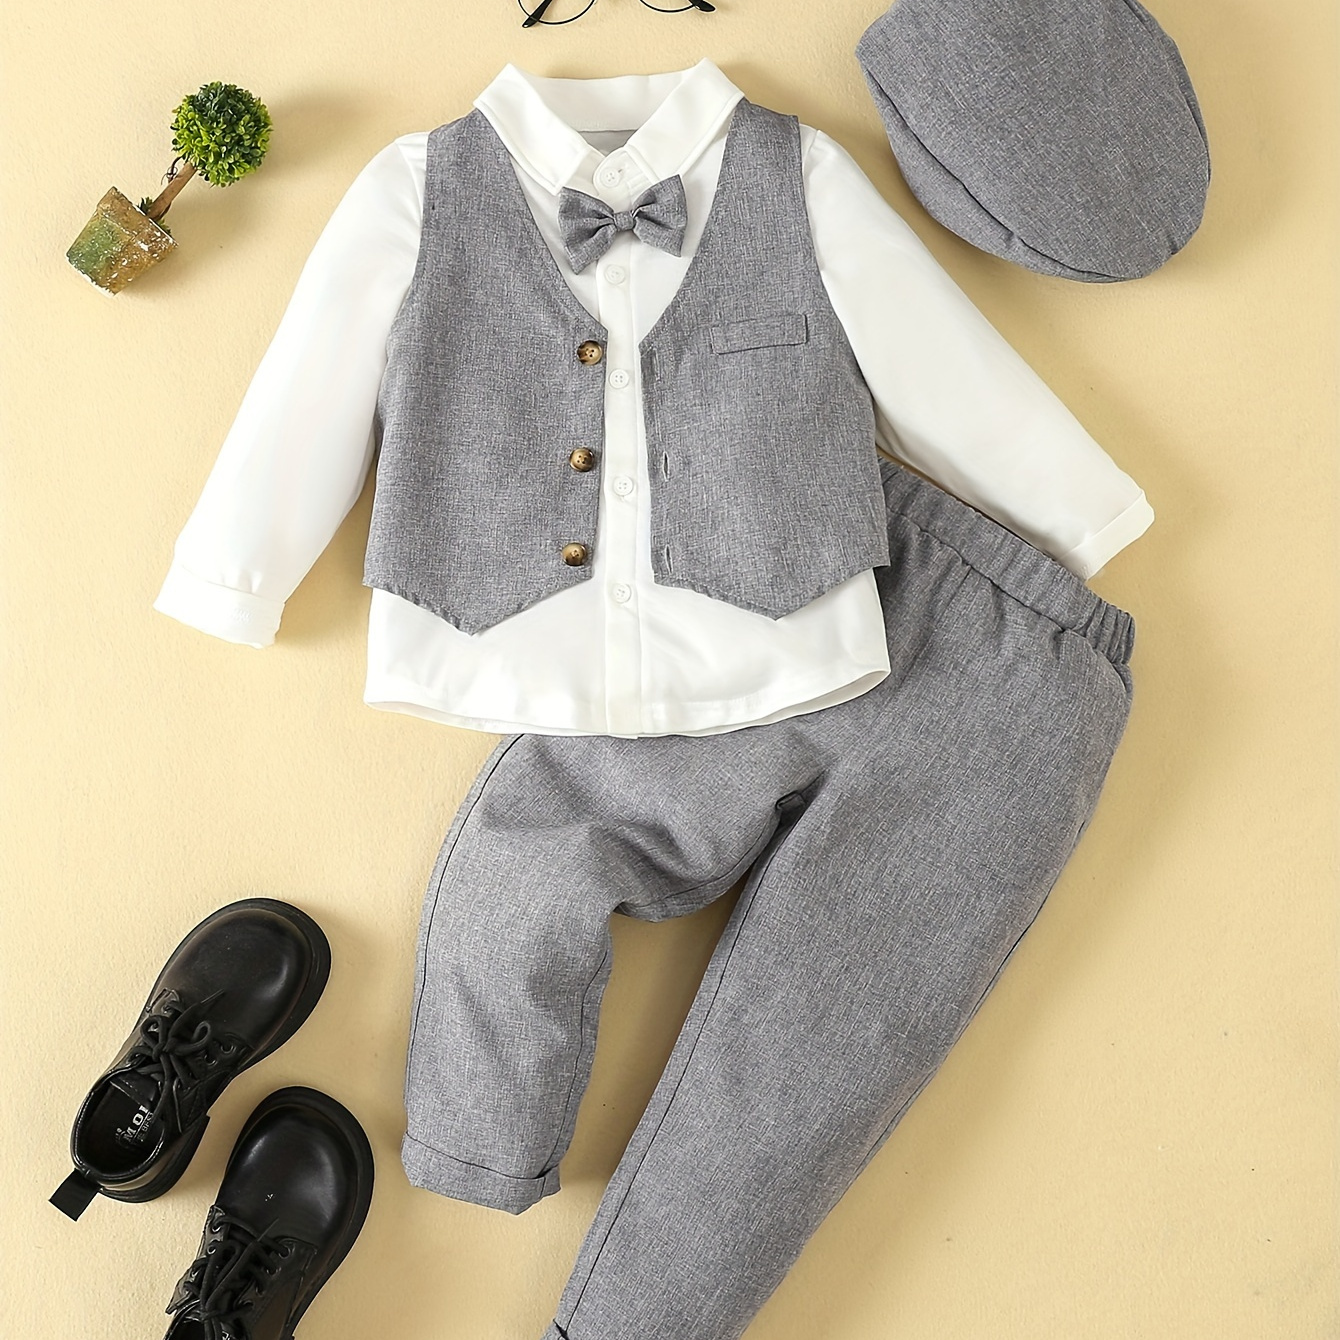 

Boys Gentleman Suit Set, Long Sleeve Shirt With Bowtie, Vest Waistcoat, Long Pants, Formal Cap, Elegant Outfit For Parties, Birthdays, Evening Events